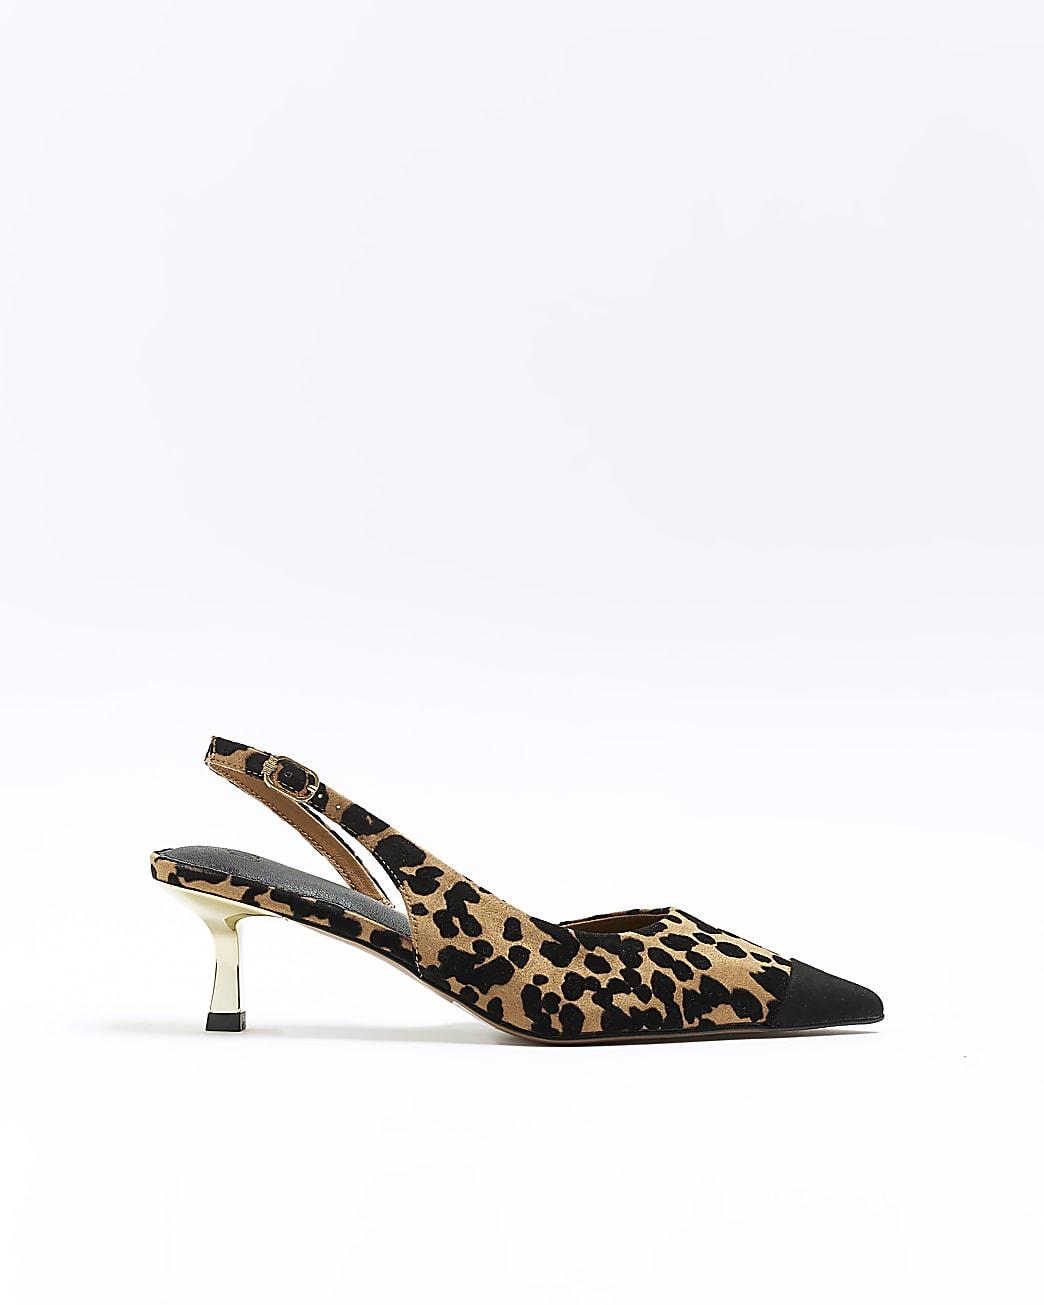 River Island Leopard Print Kitten Heel Court Shoes in White | Lyst Canada